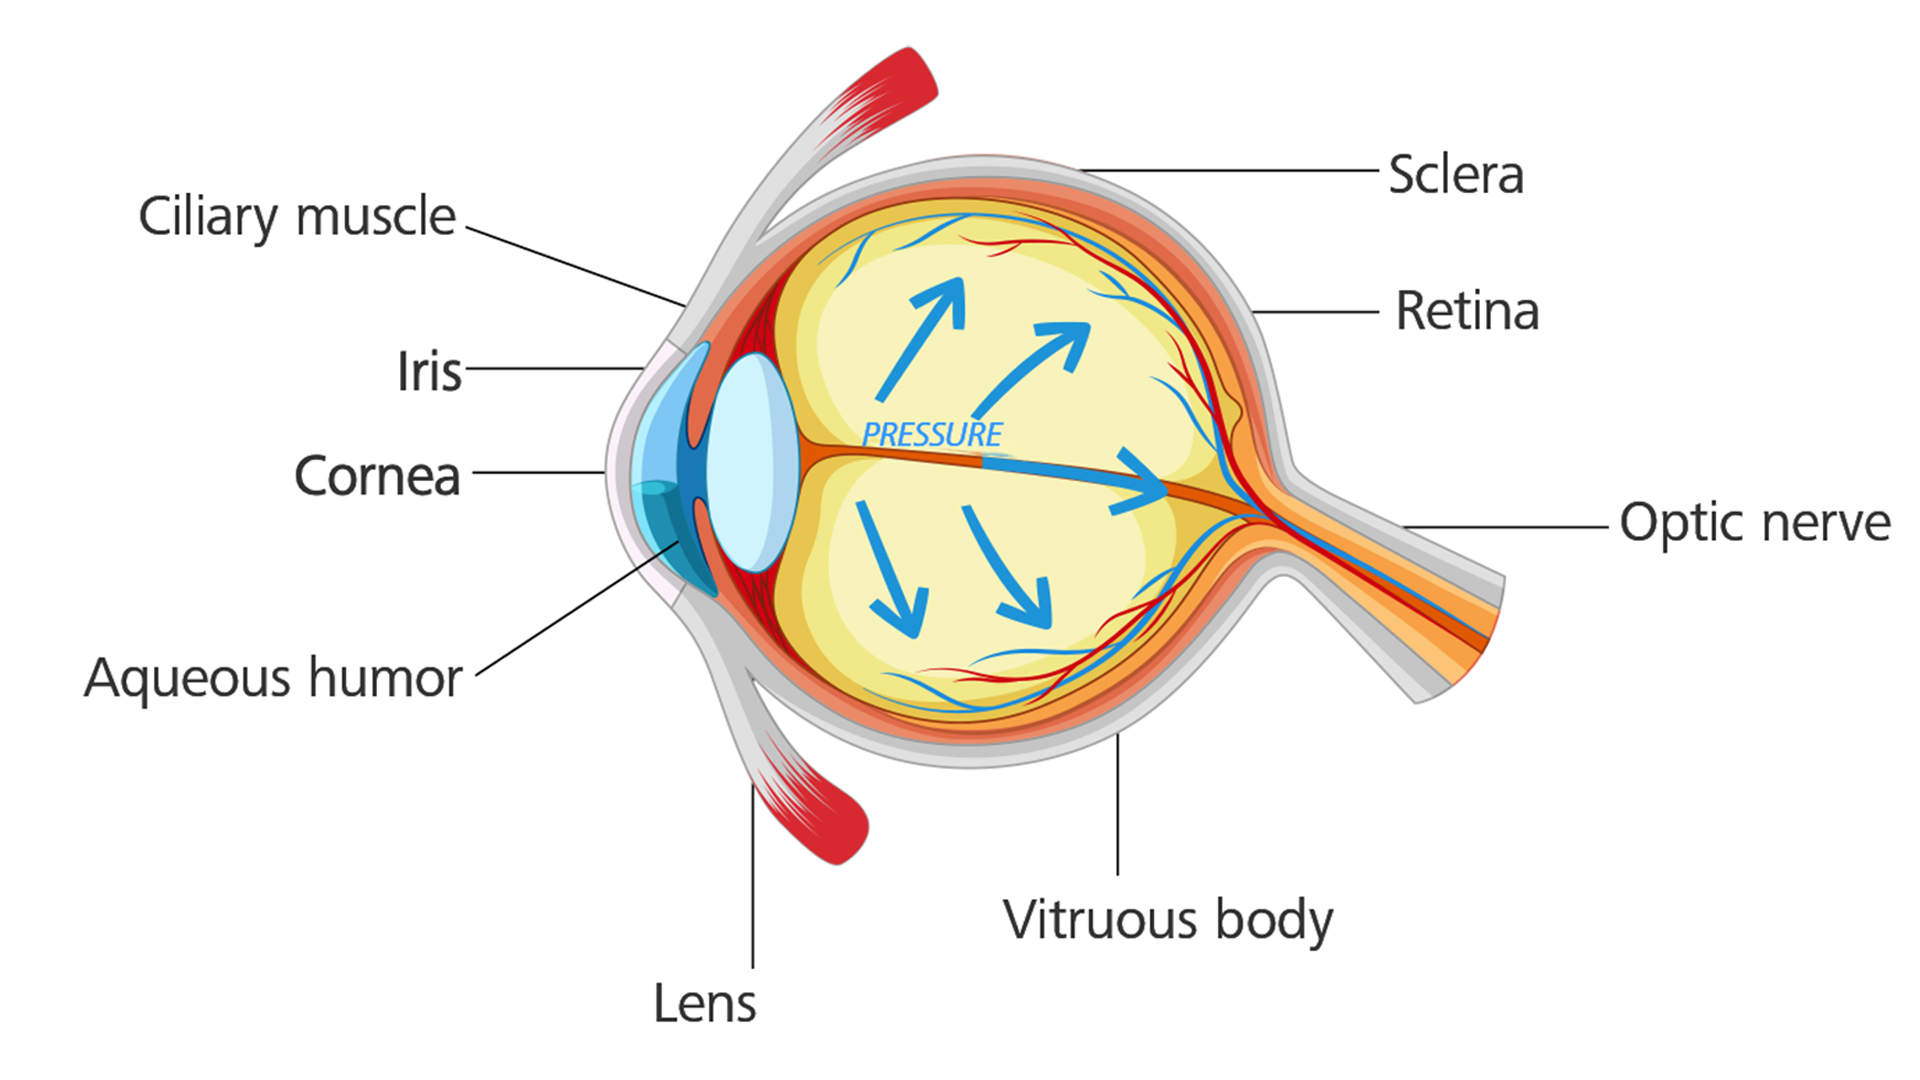 Glaucoma - High Internal Eye Pressure That Causes Vision Loss